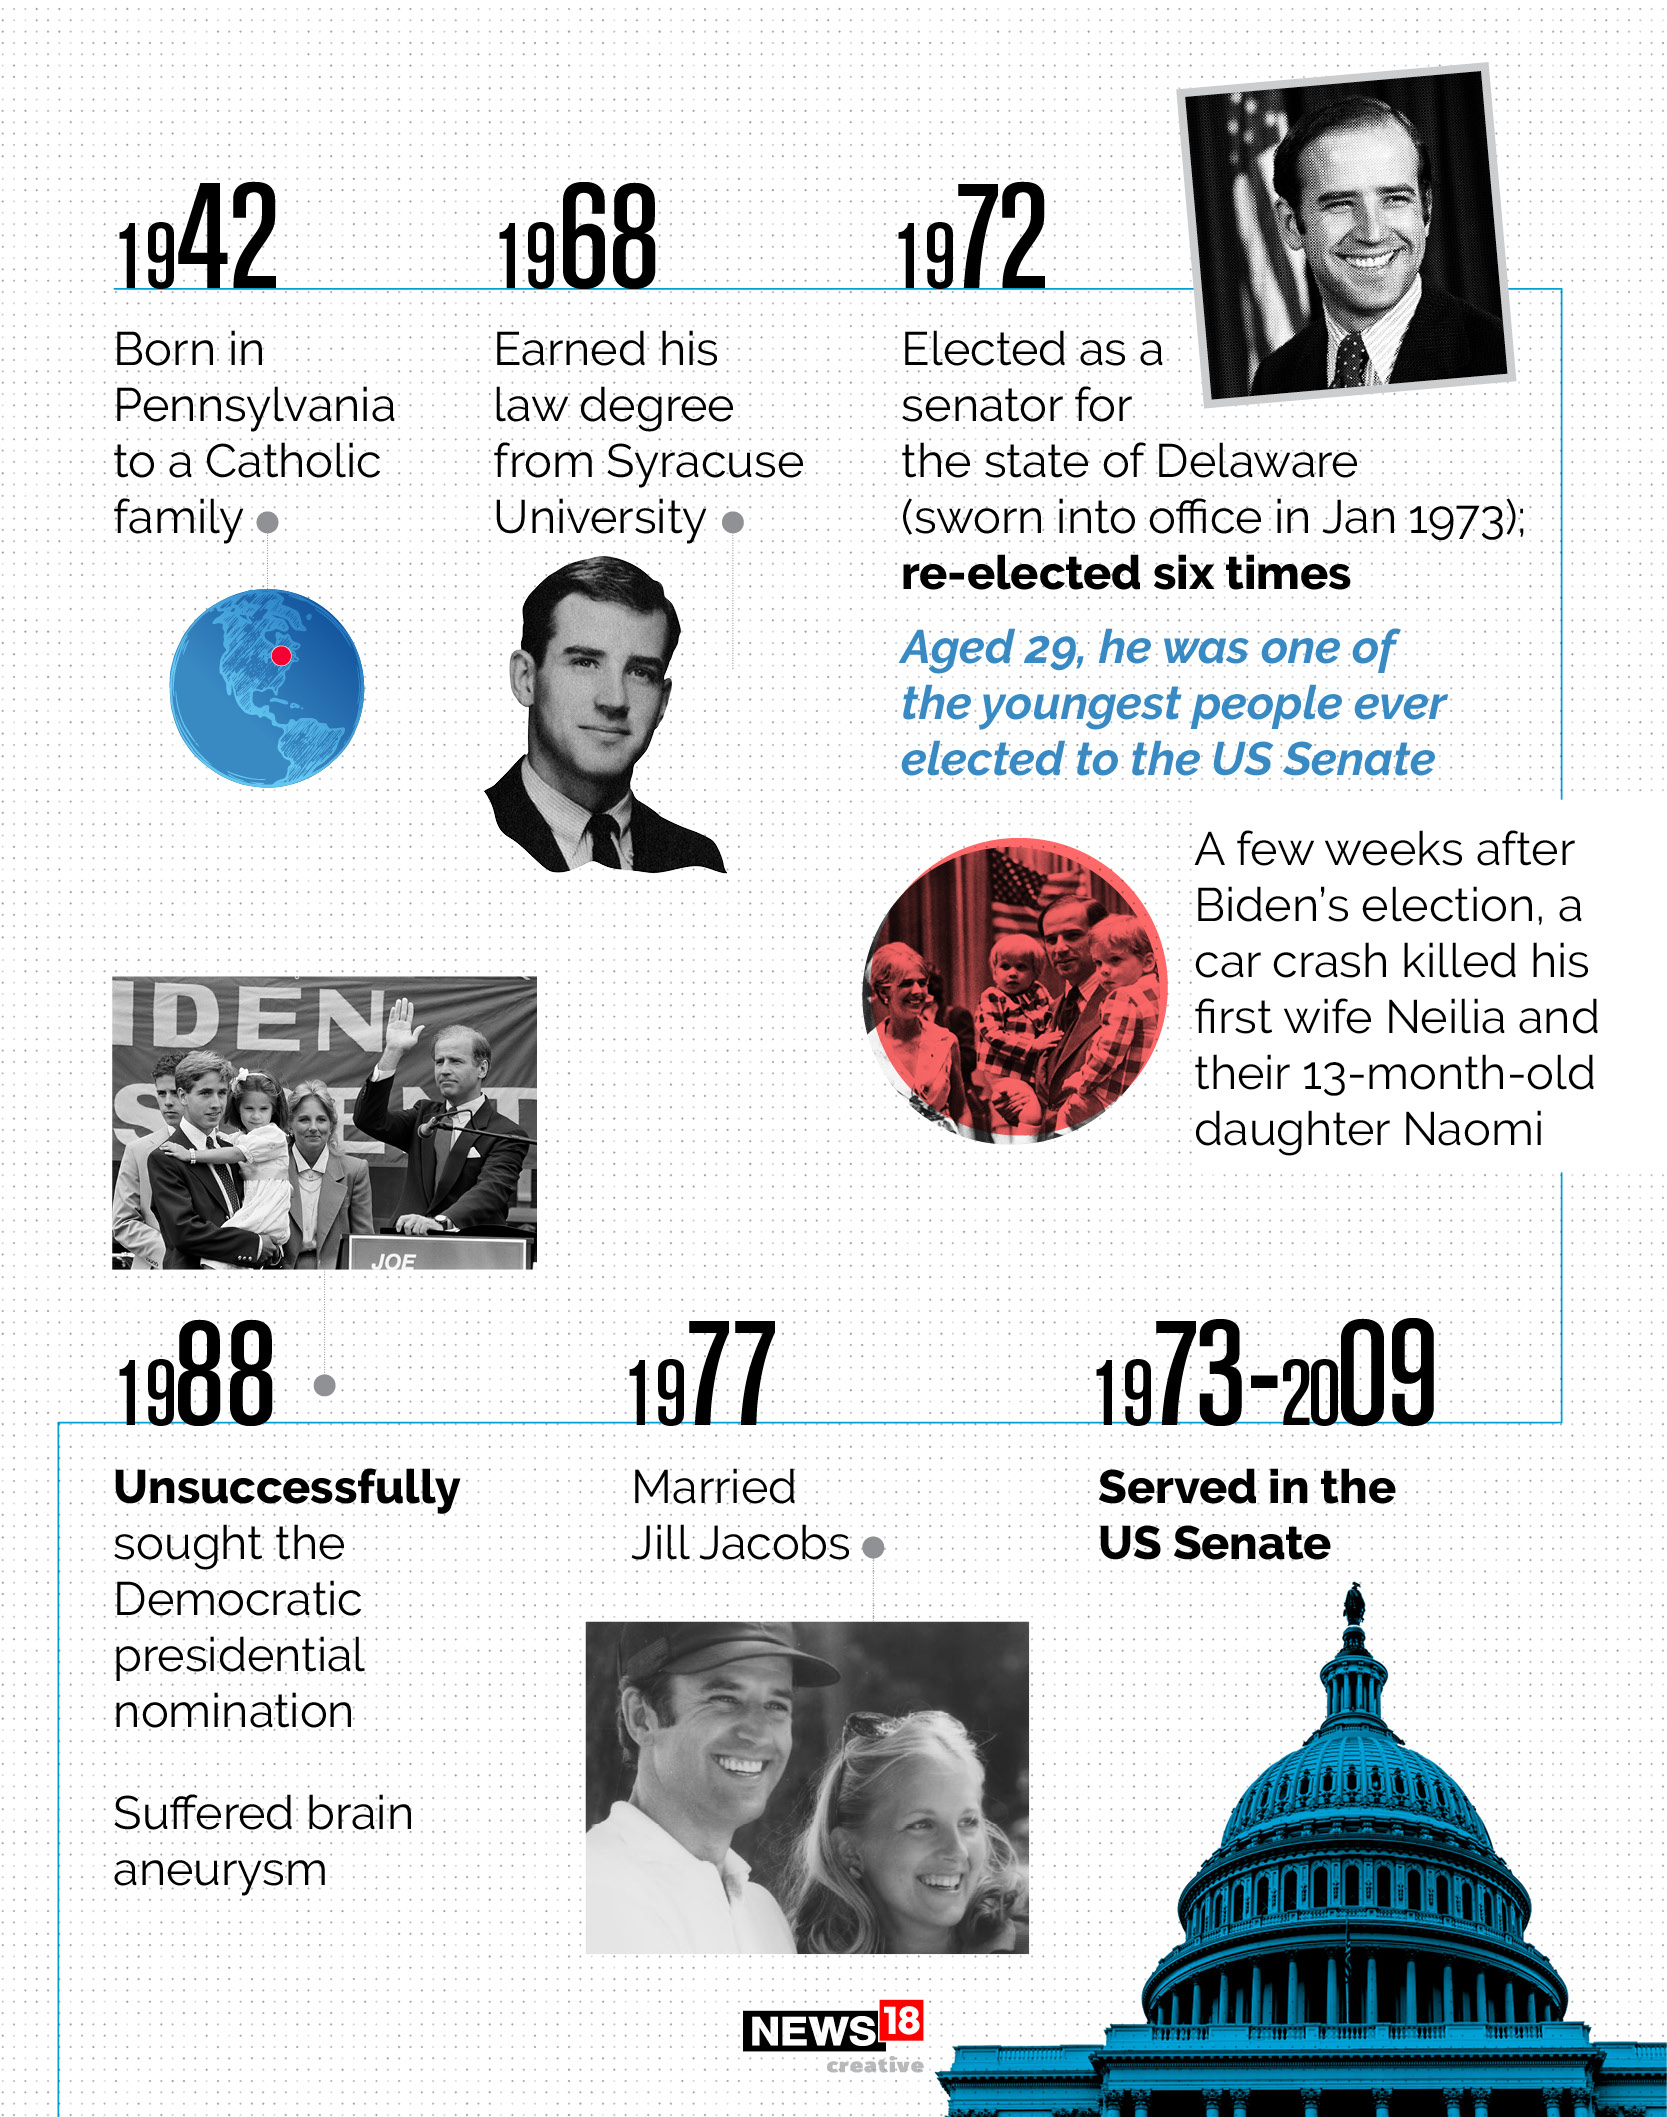 Timeline: Joe Biden, from youngest senator to oldest president